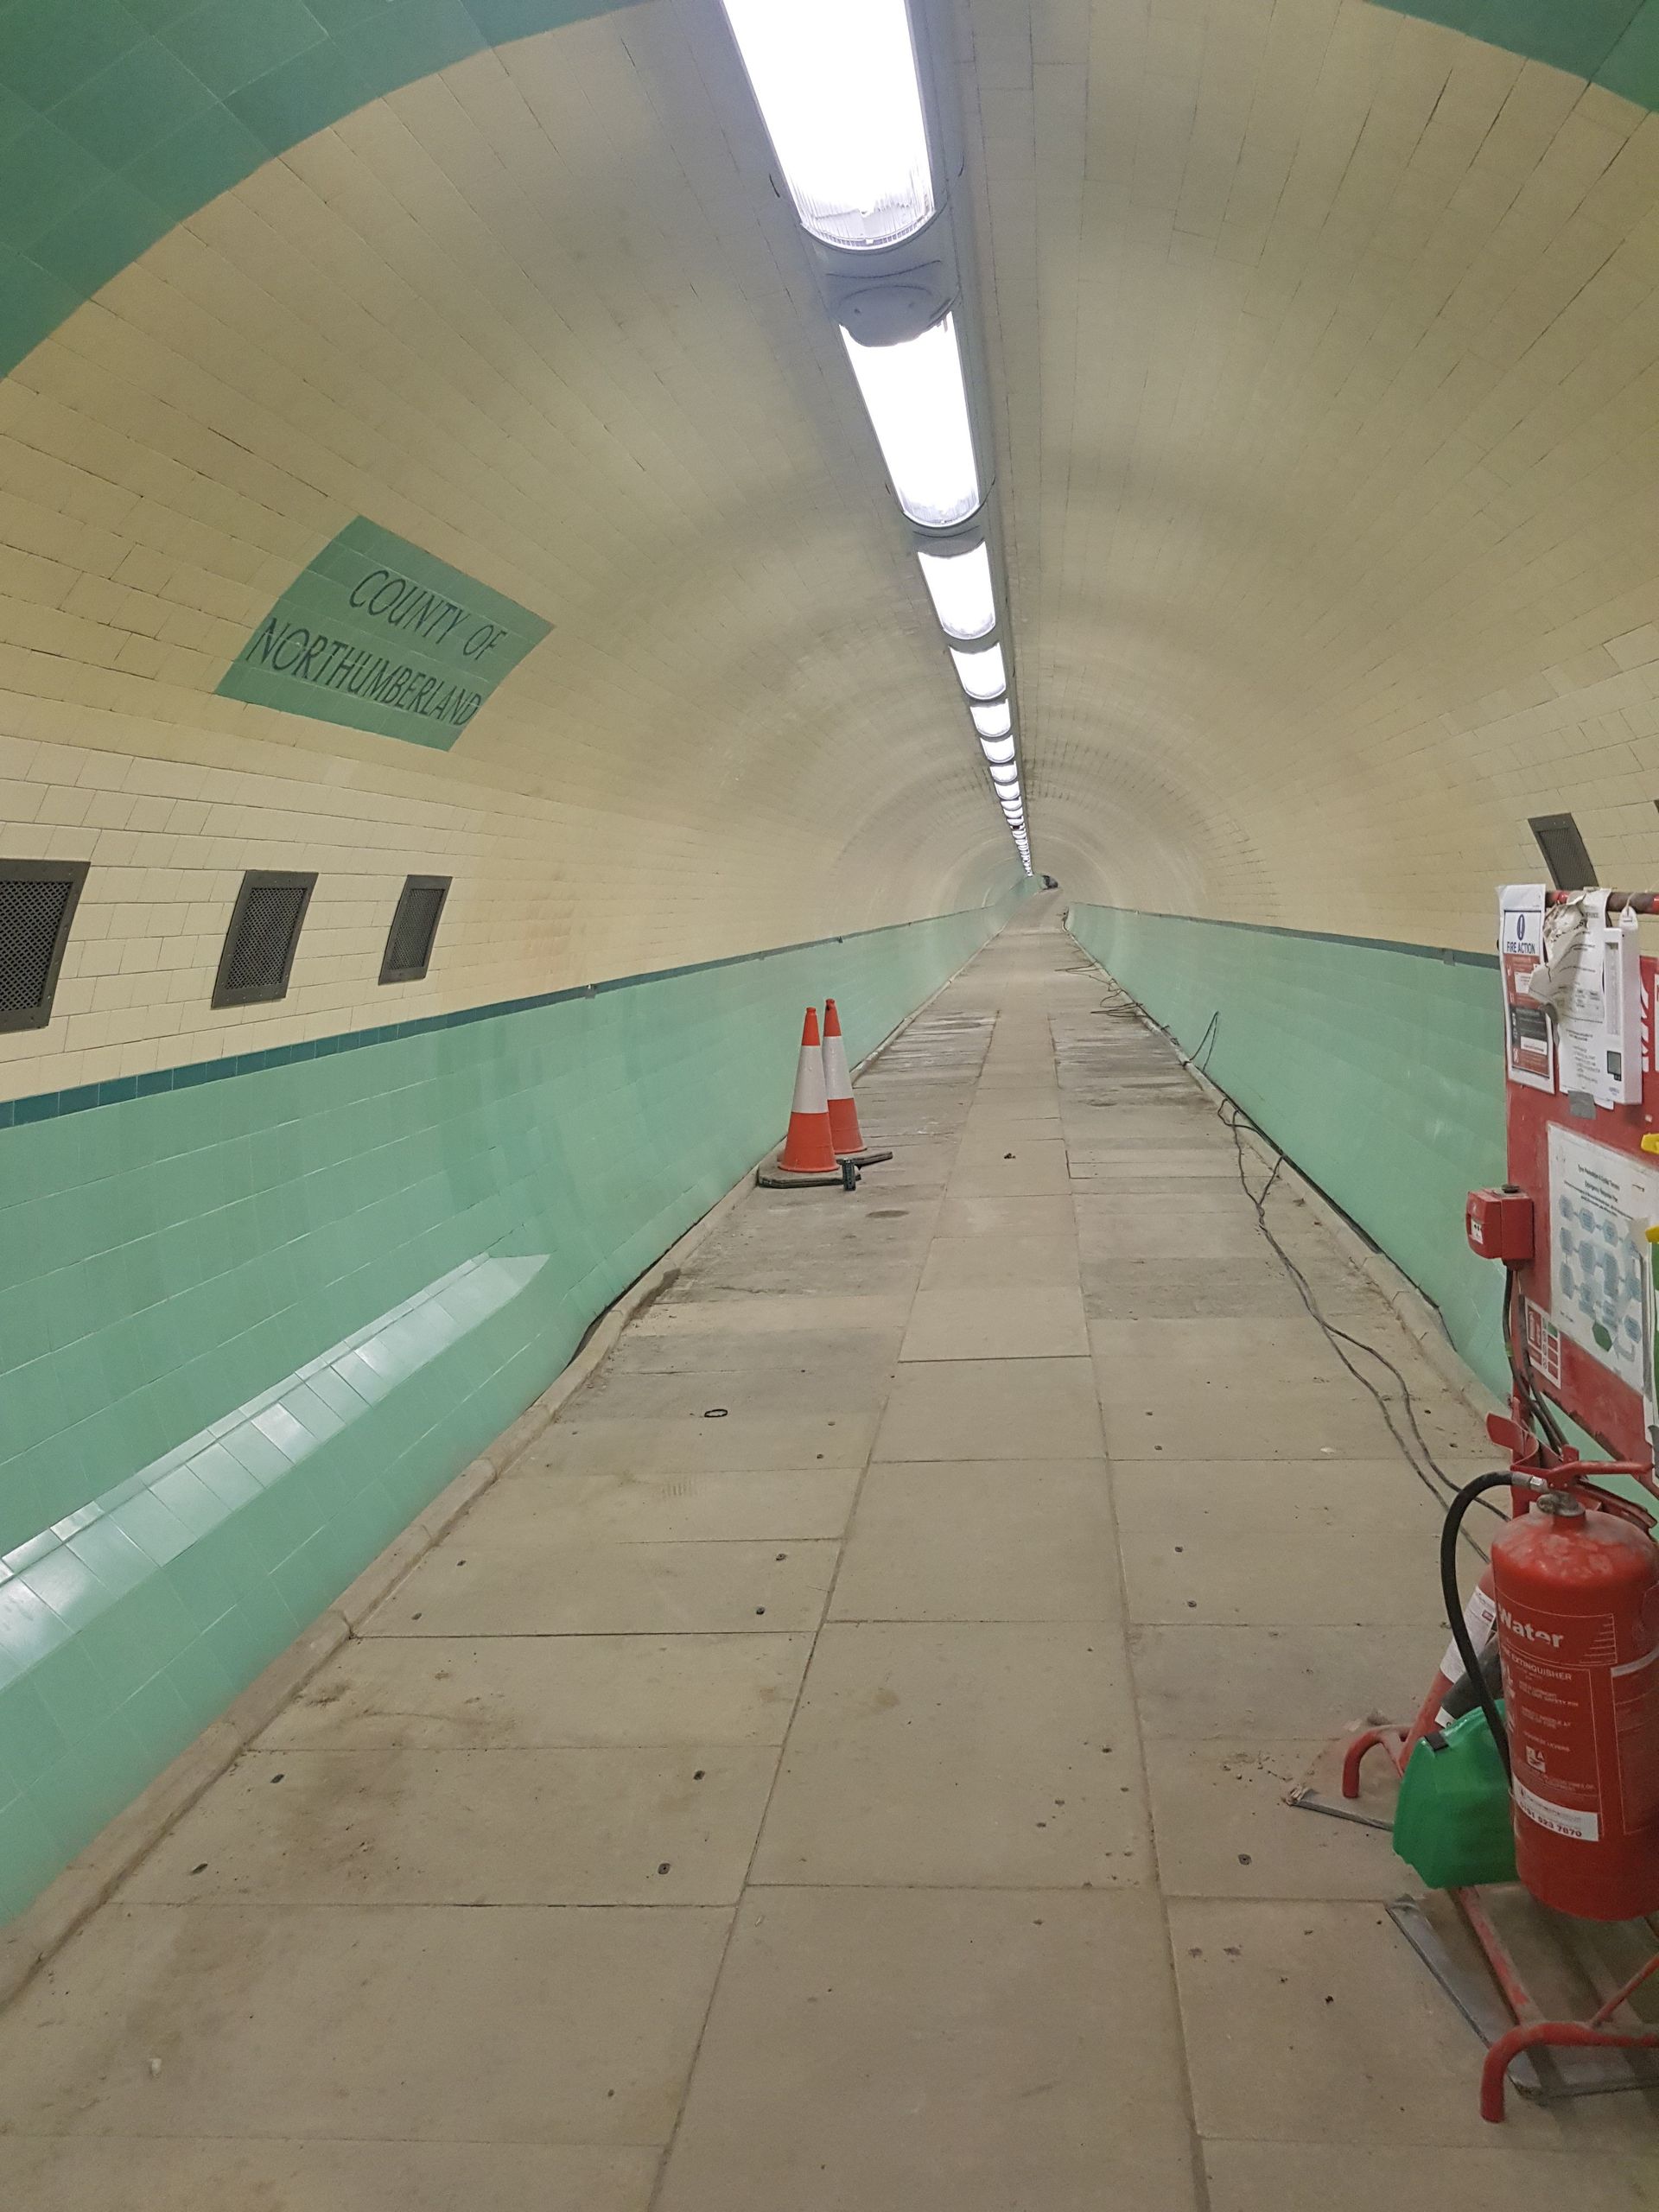 Tyne Tunnel